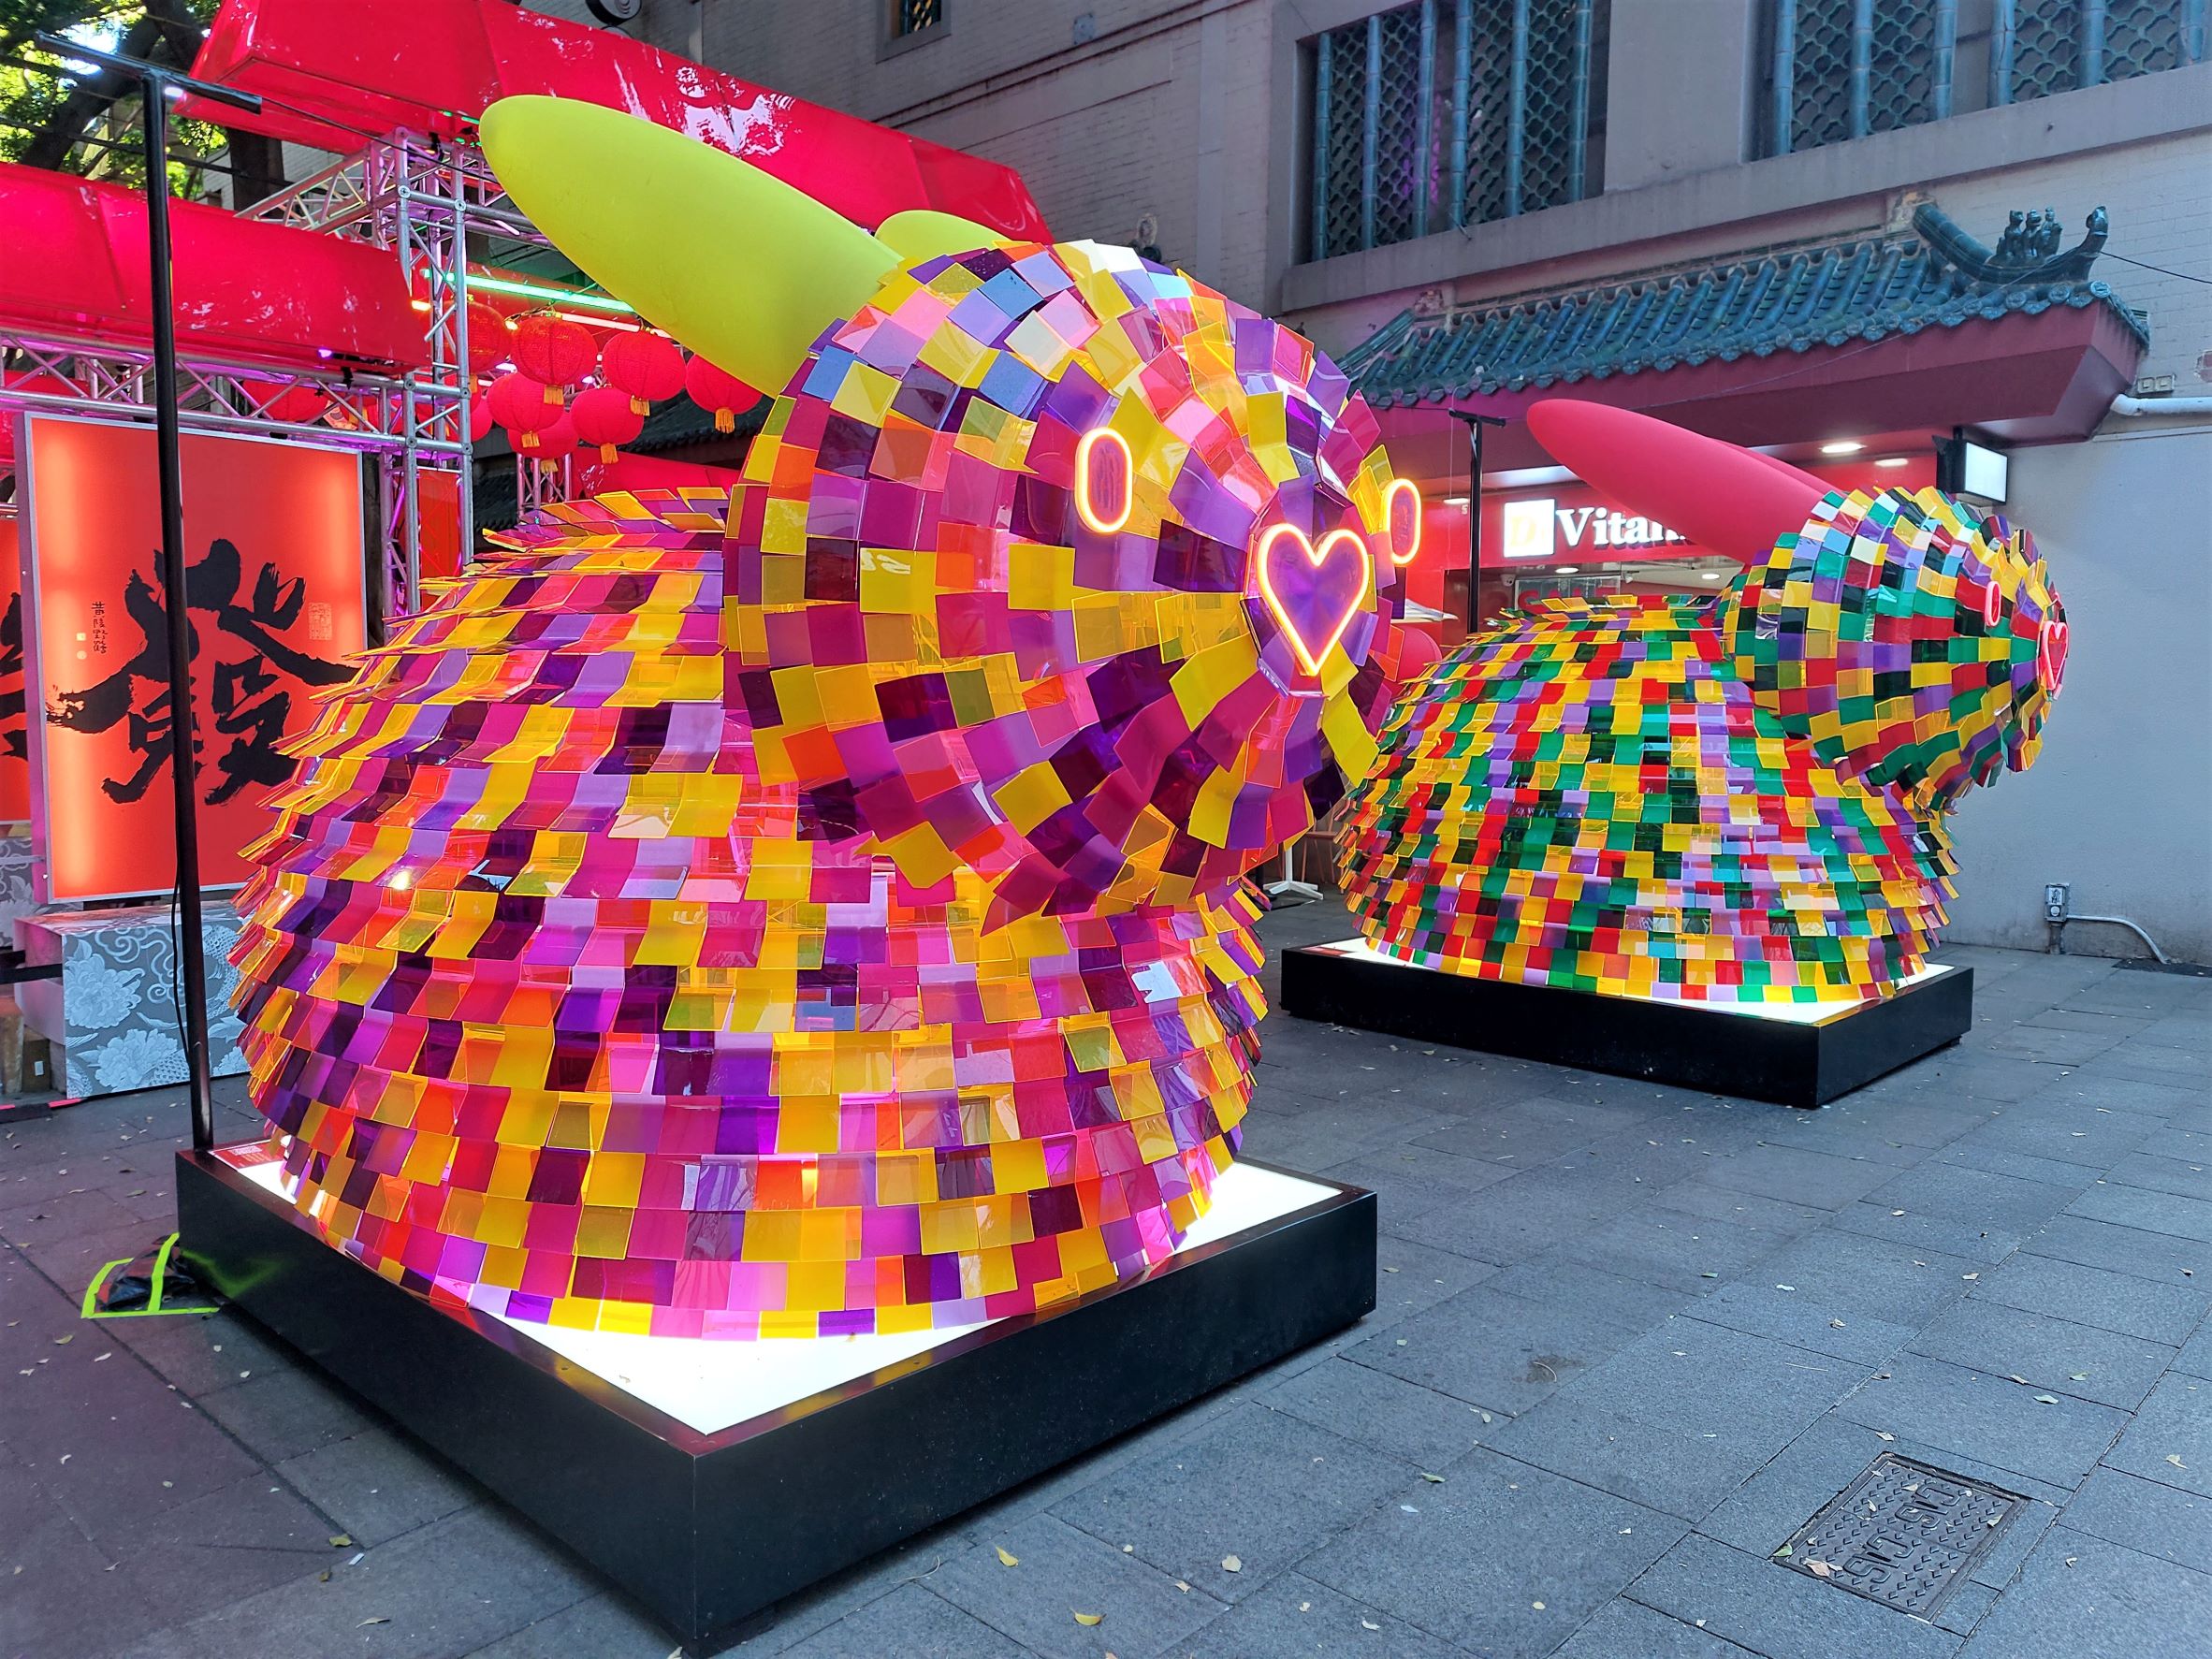 Two multi-coloured rabbit installations in Chinatown, Sydney, Australia.